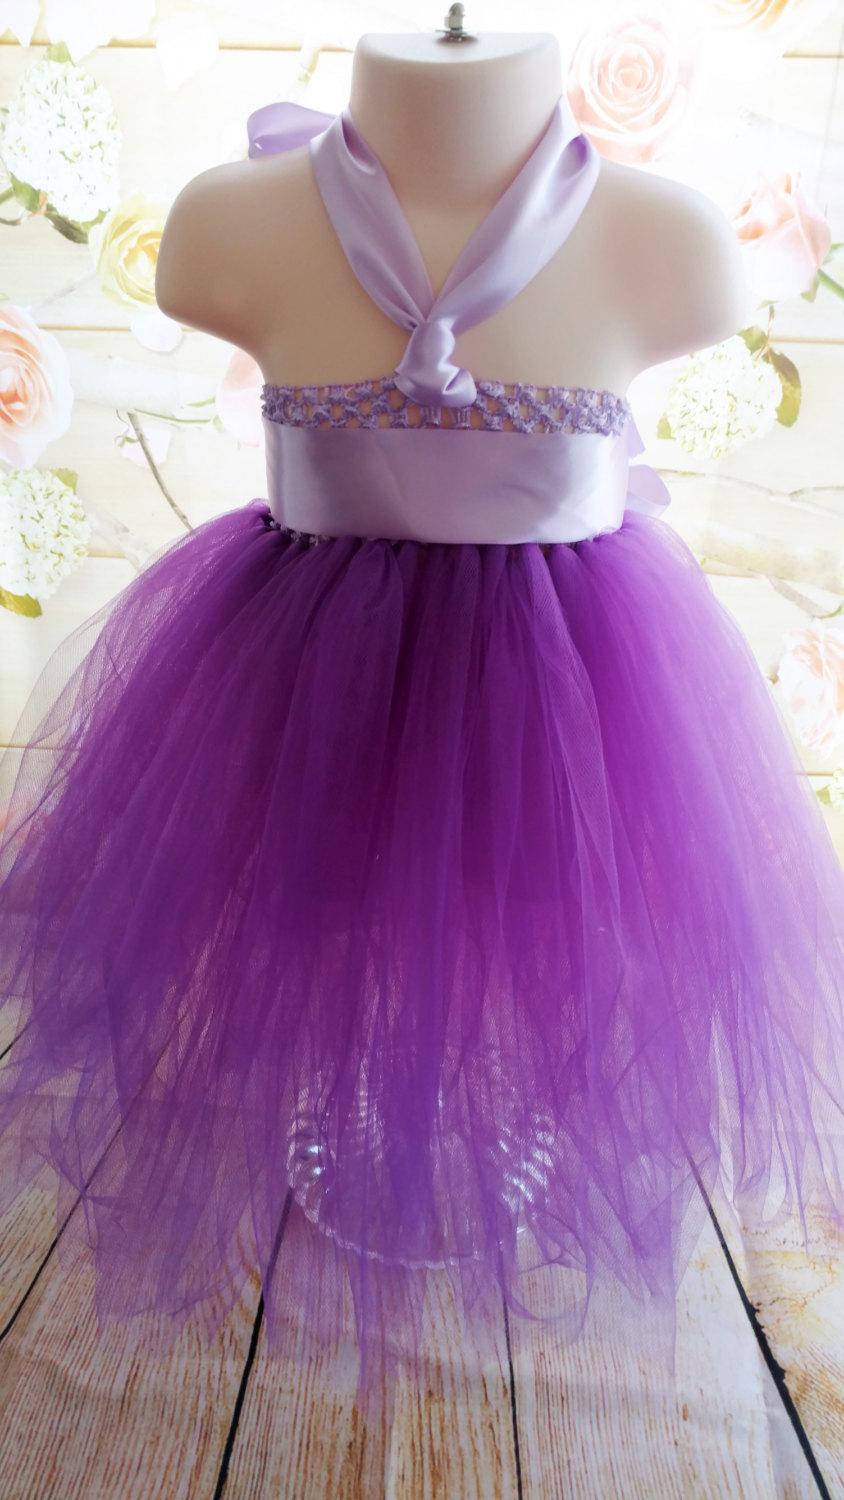 زفاف - Purple Flower Girl Dress-Baby Tutu Dress-Toddler Purple Tutu Dress-Tulle Tutu Dress Lavender Tutu Dress-Tutu-Flower Girl Dress-Photo Prop